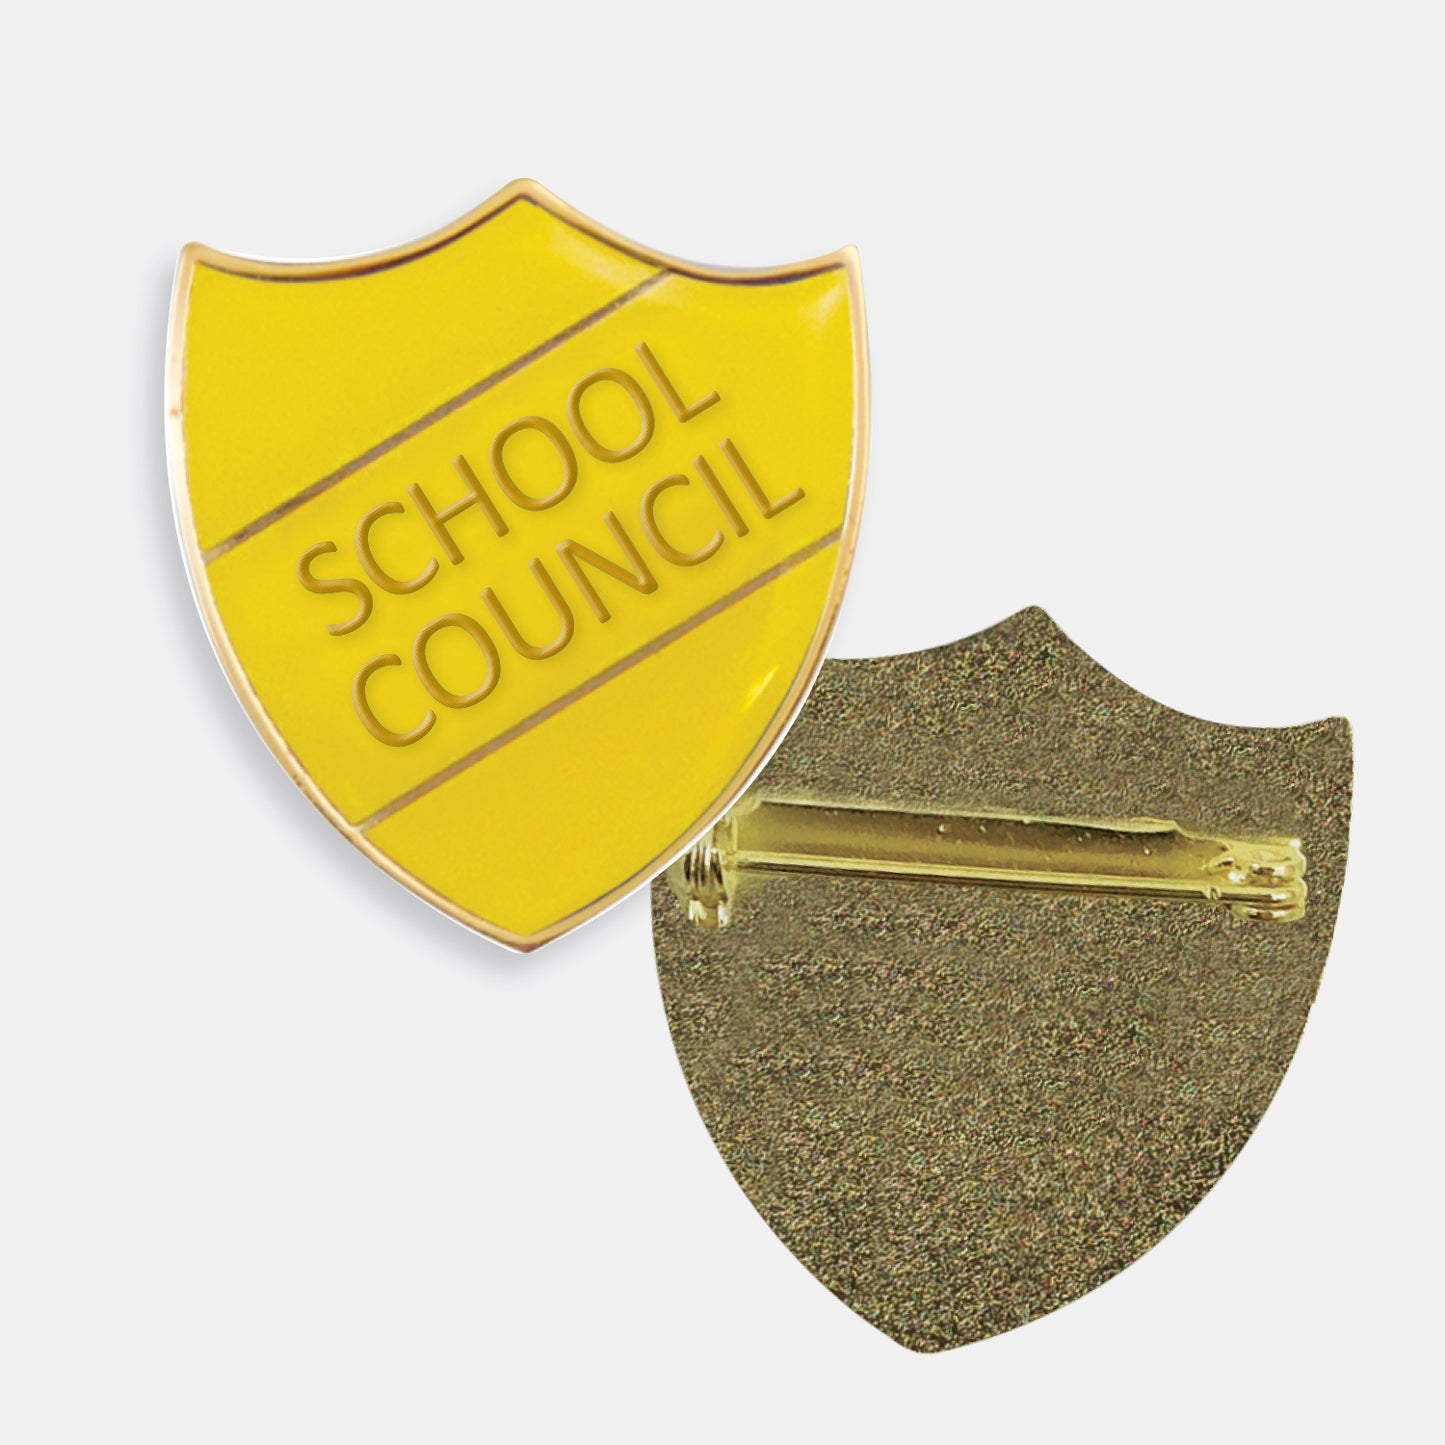 Enamel School Council Shield Badge - 30 x 26mm